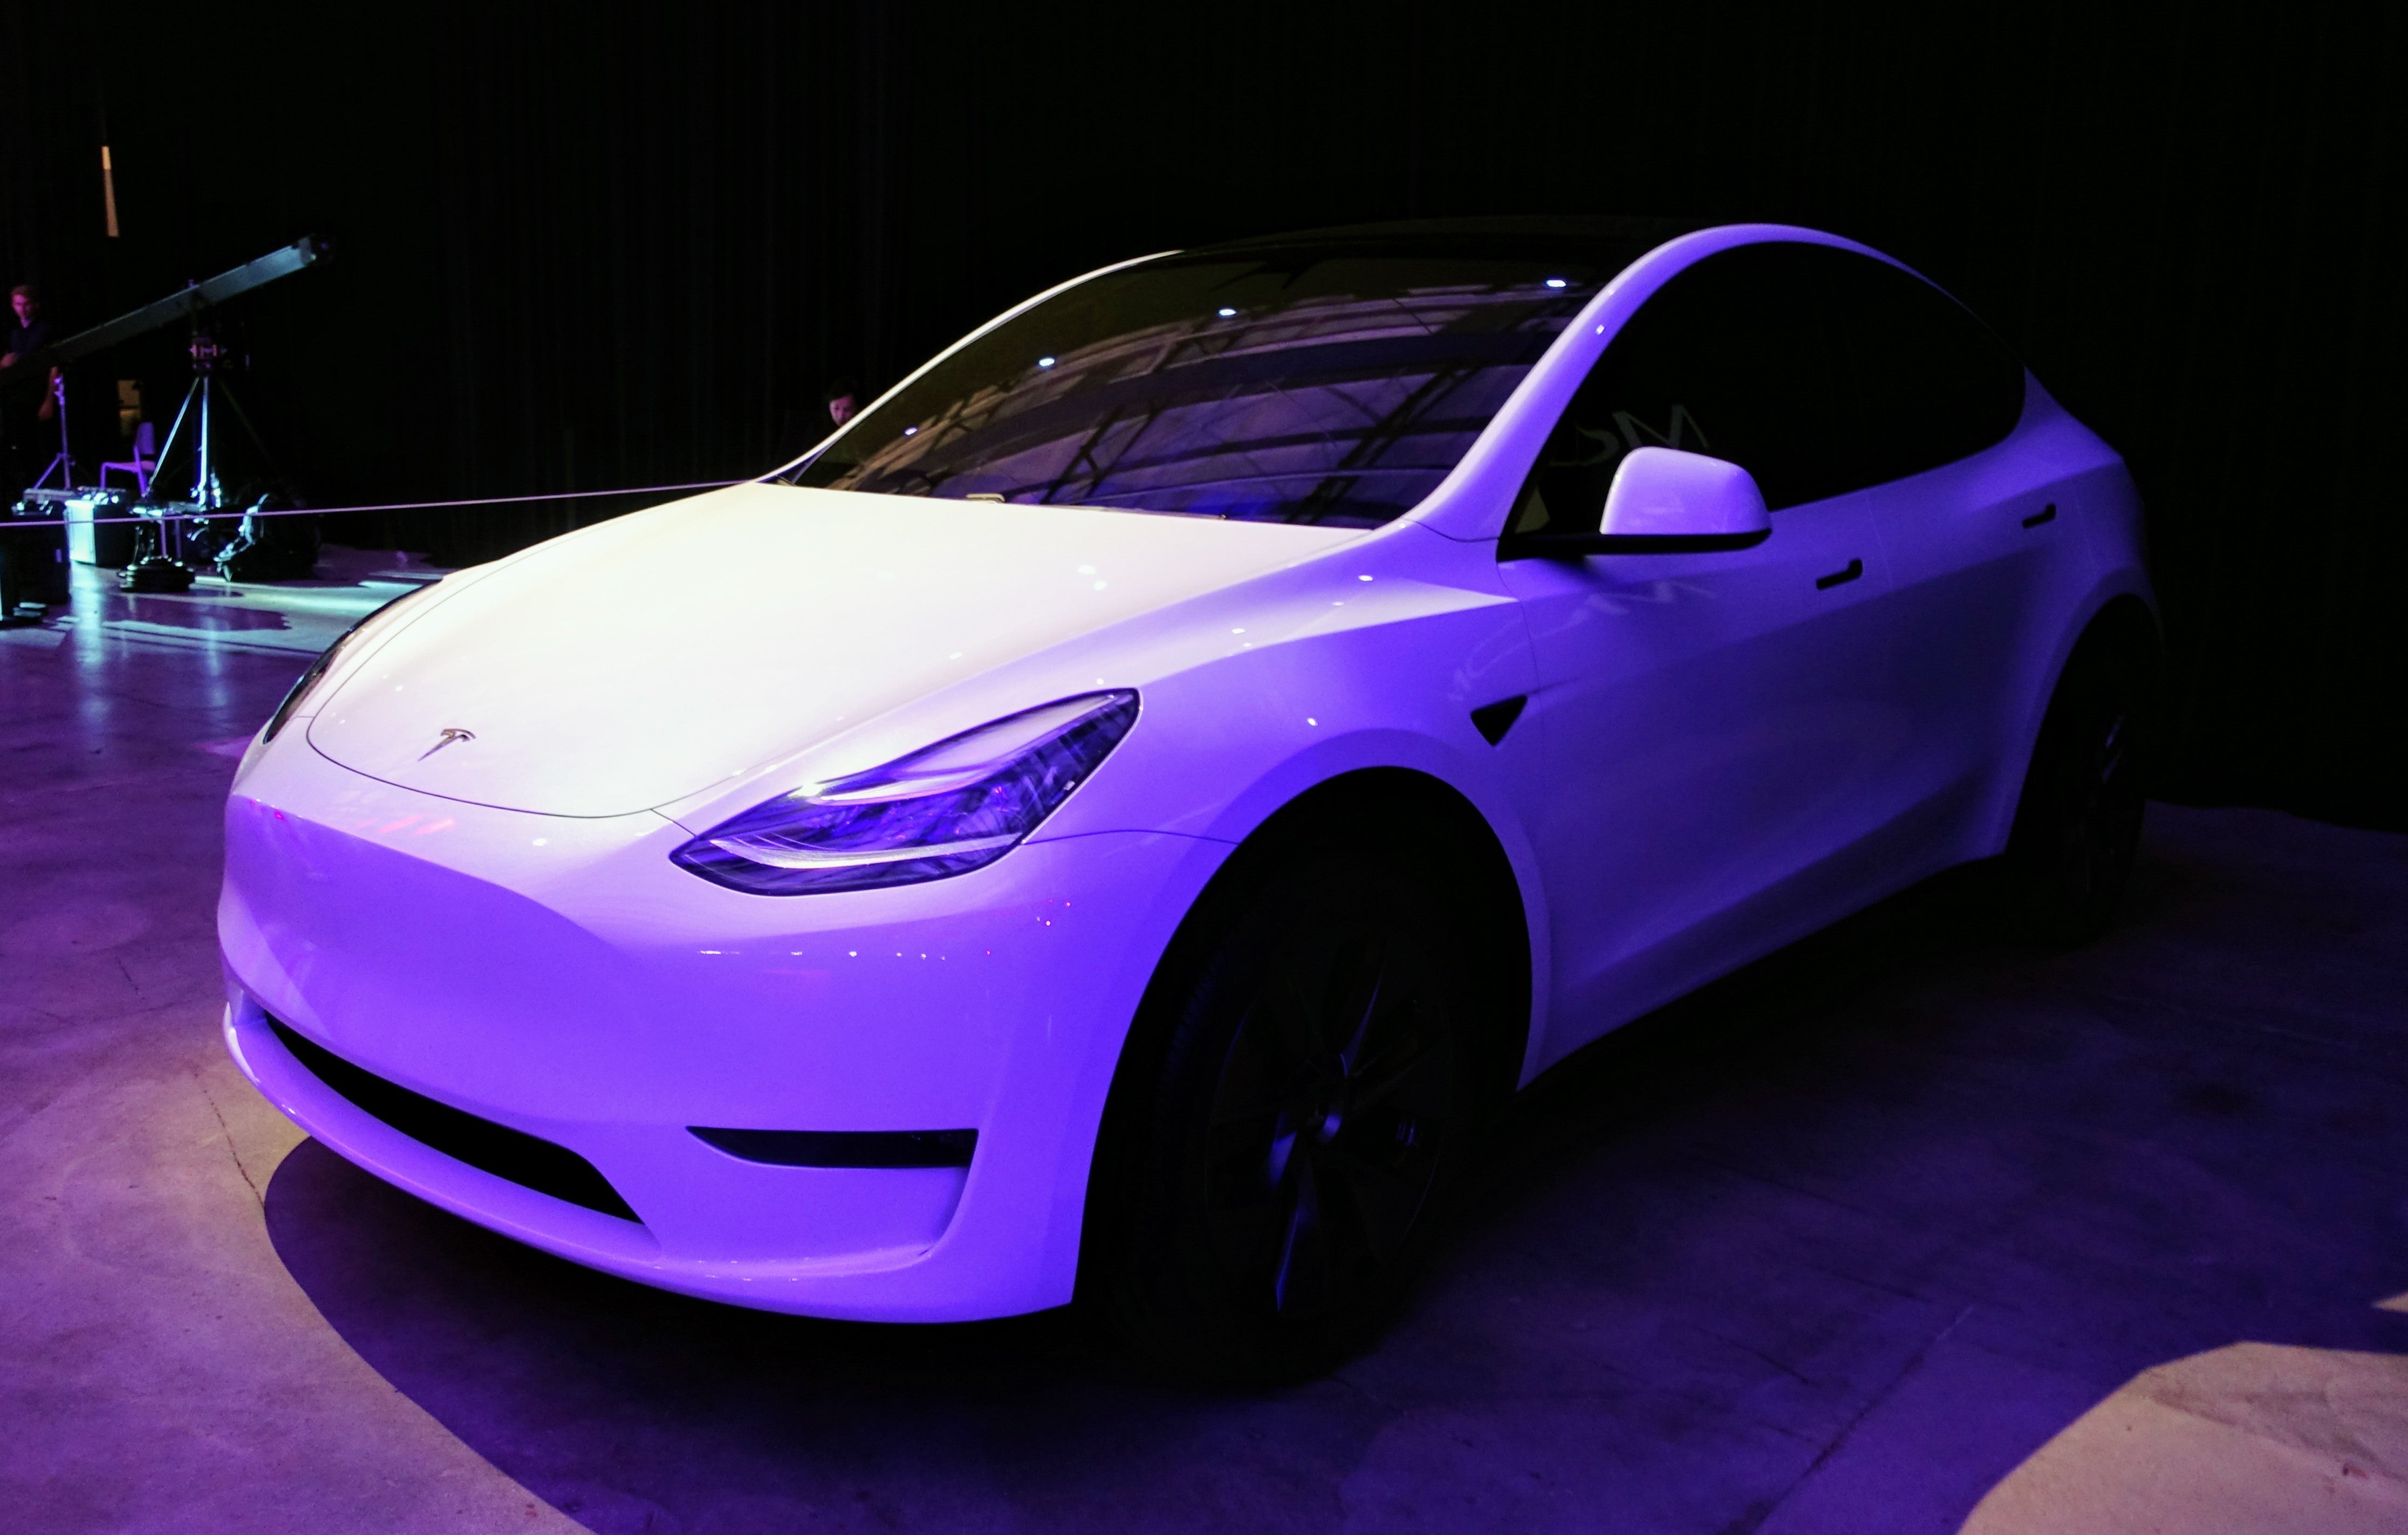 Tesla’s Fremont Factory will produce 1,000 Model Ys each week, starting next year, said Baird analyst Ben Kallo